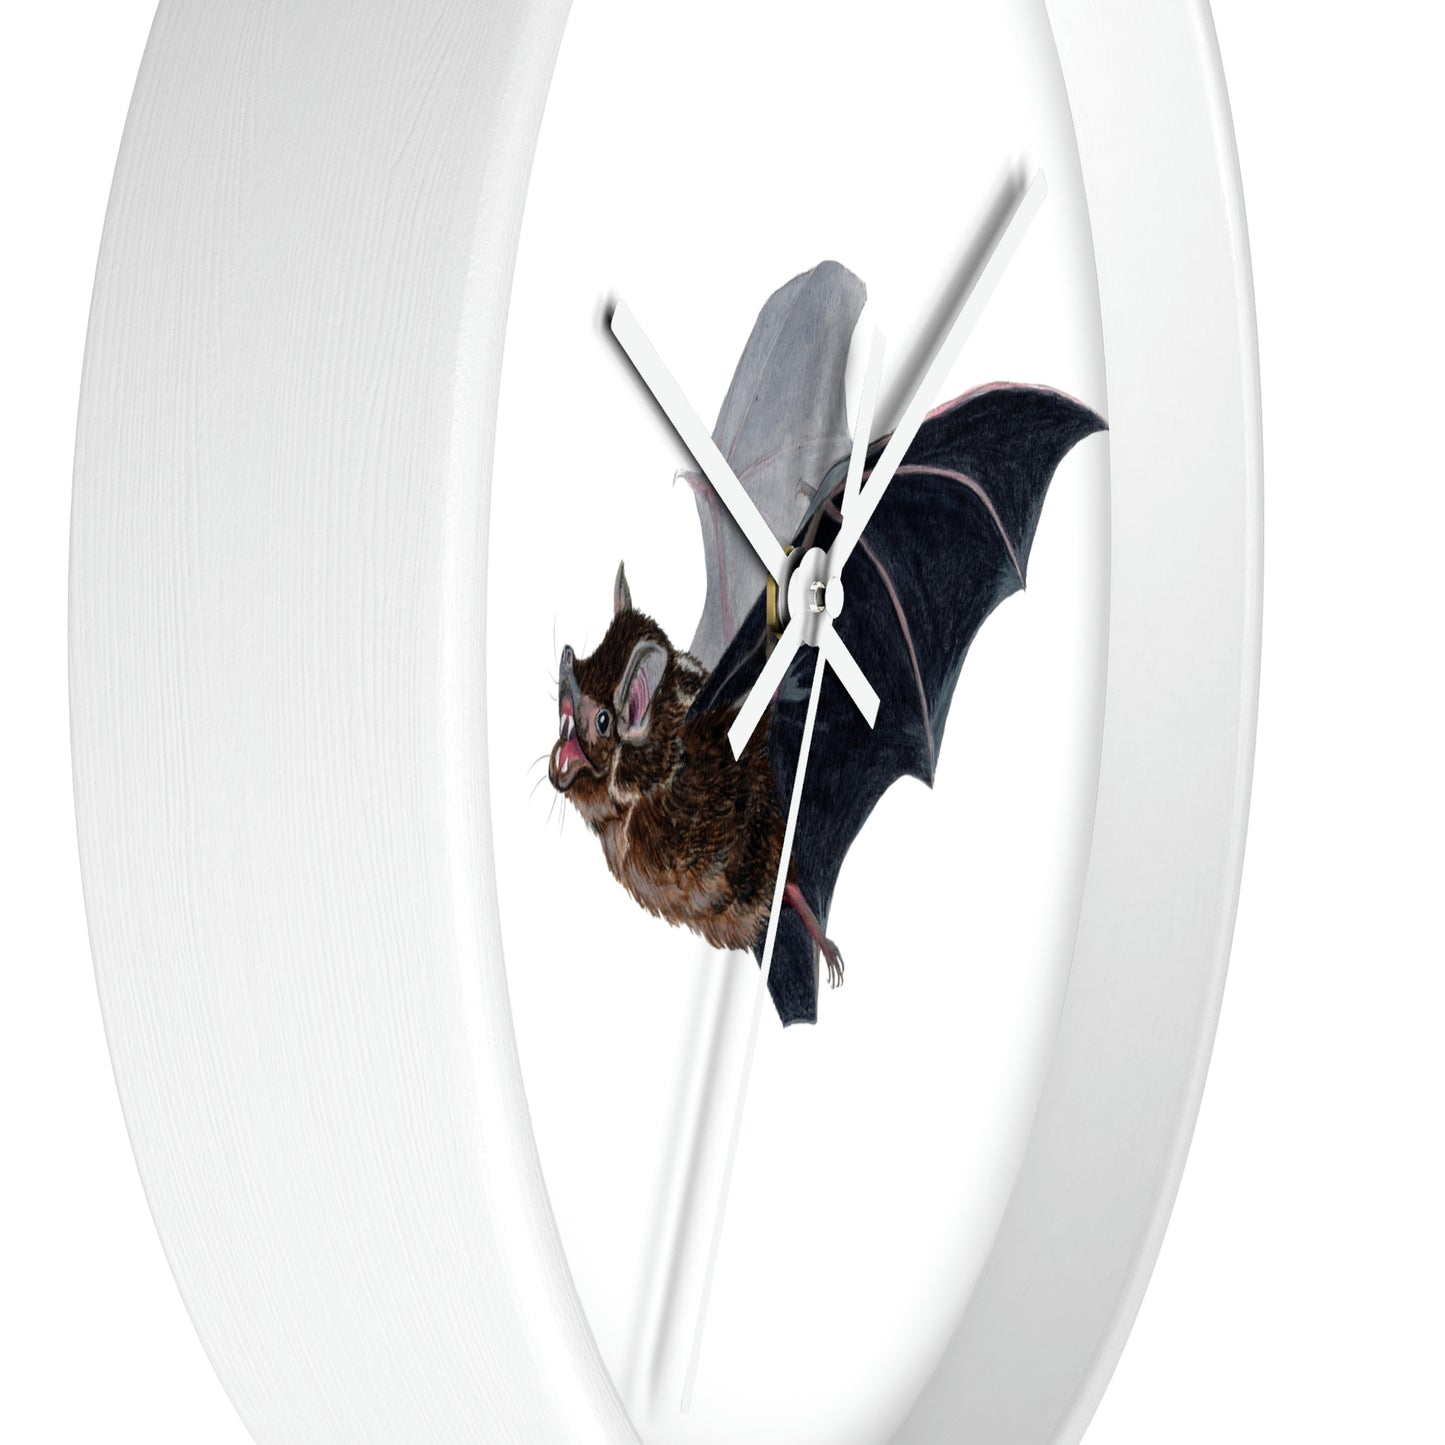 Greater Sac-winged Bat Wall Clock